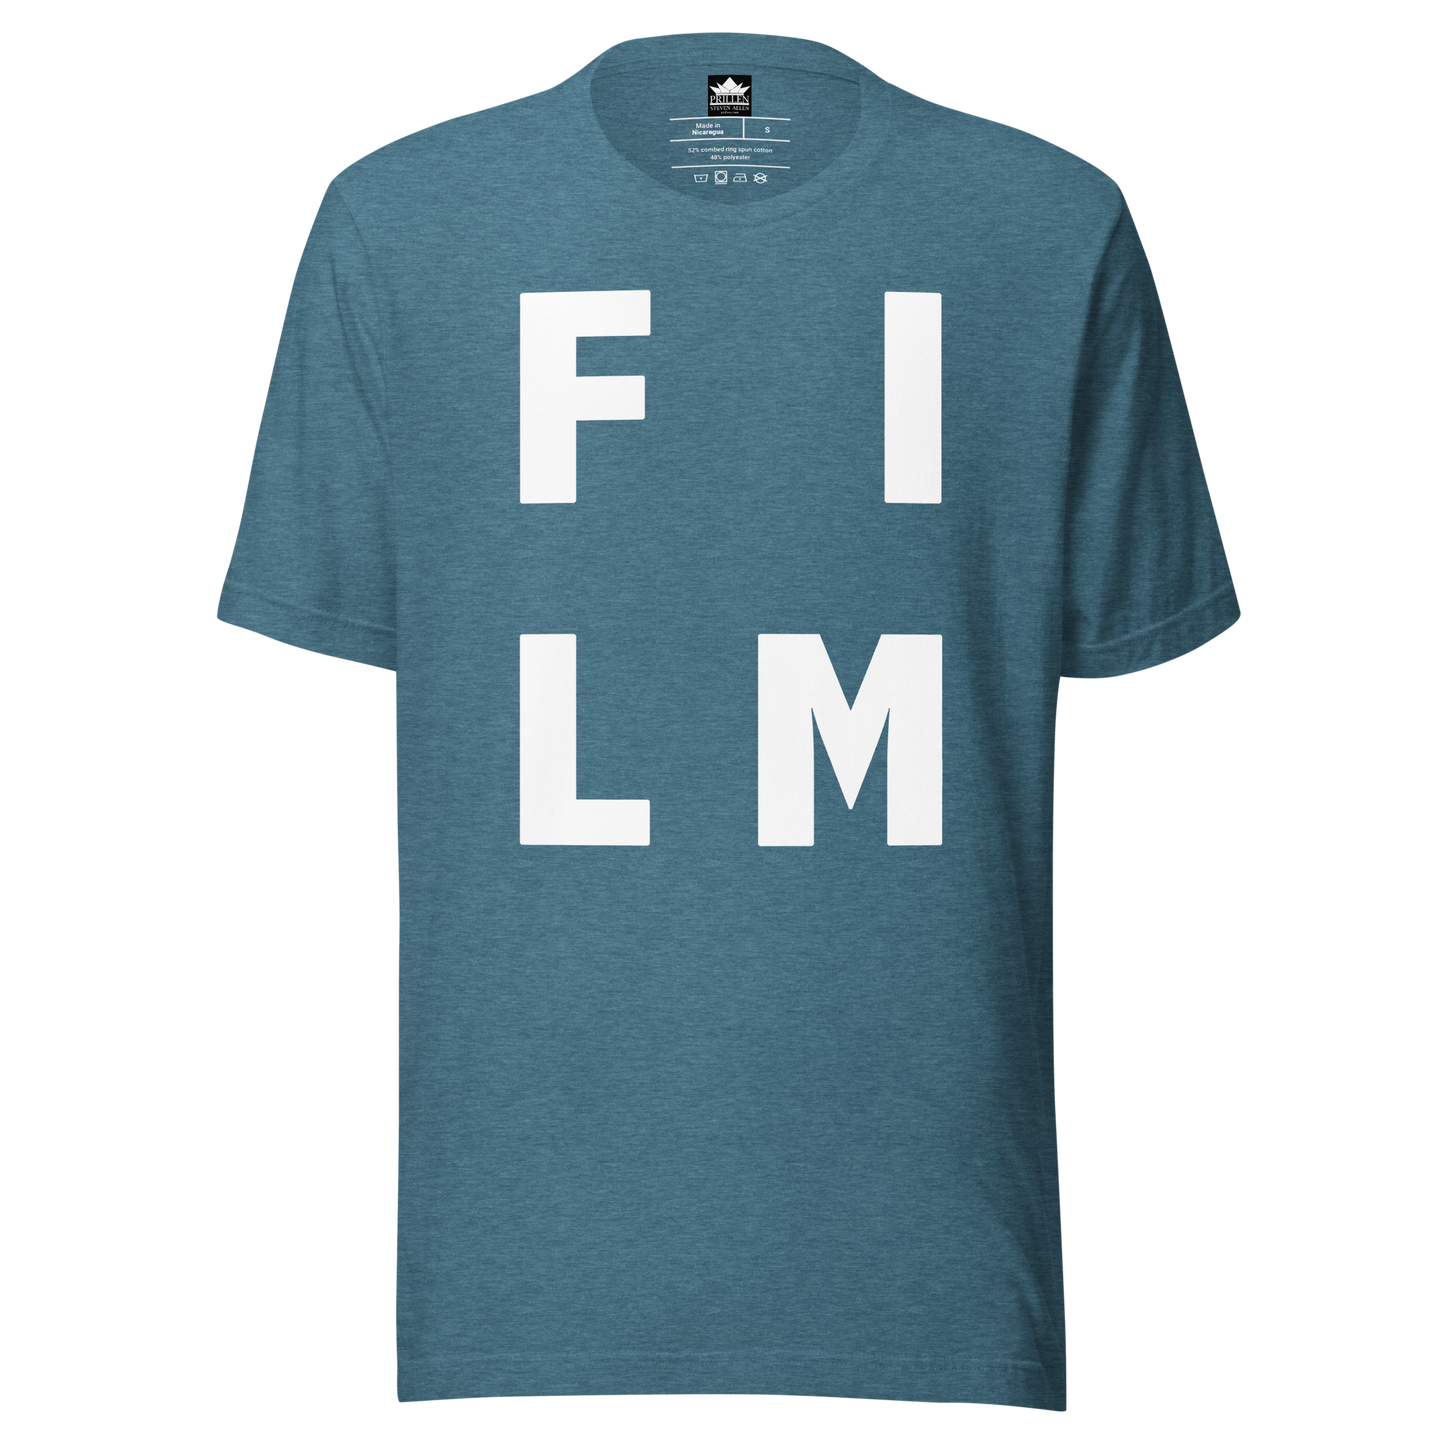 Prillen Film T-Shirt